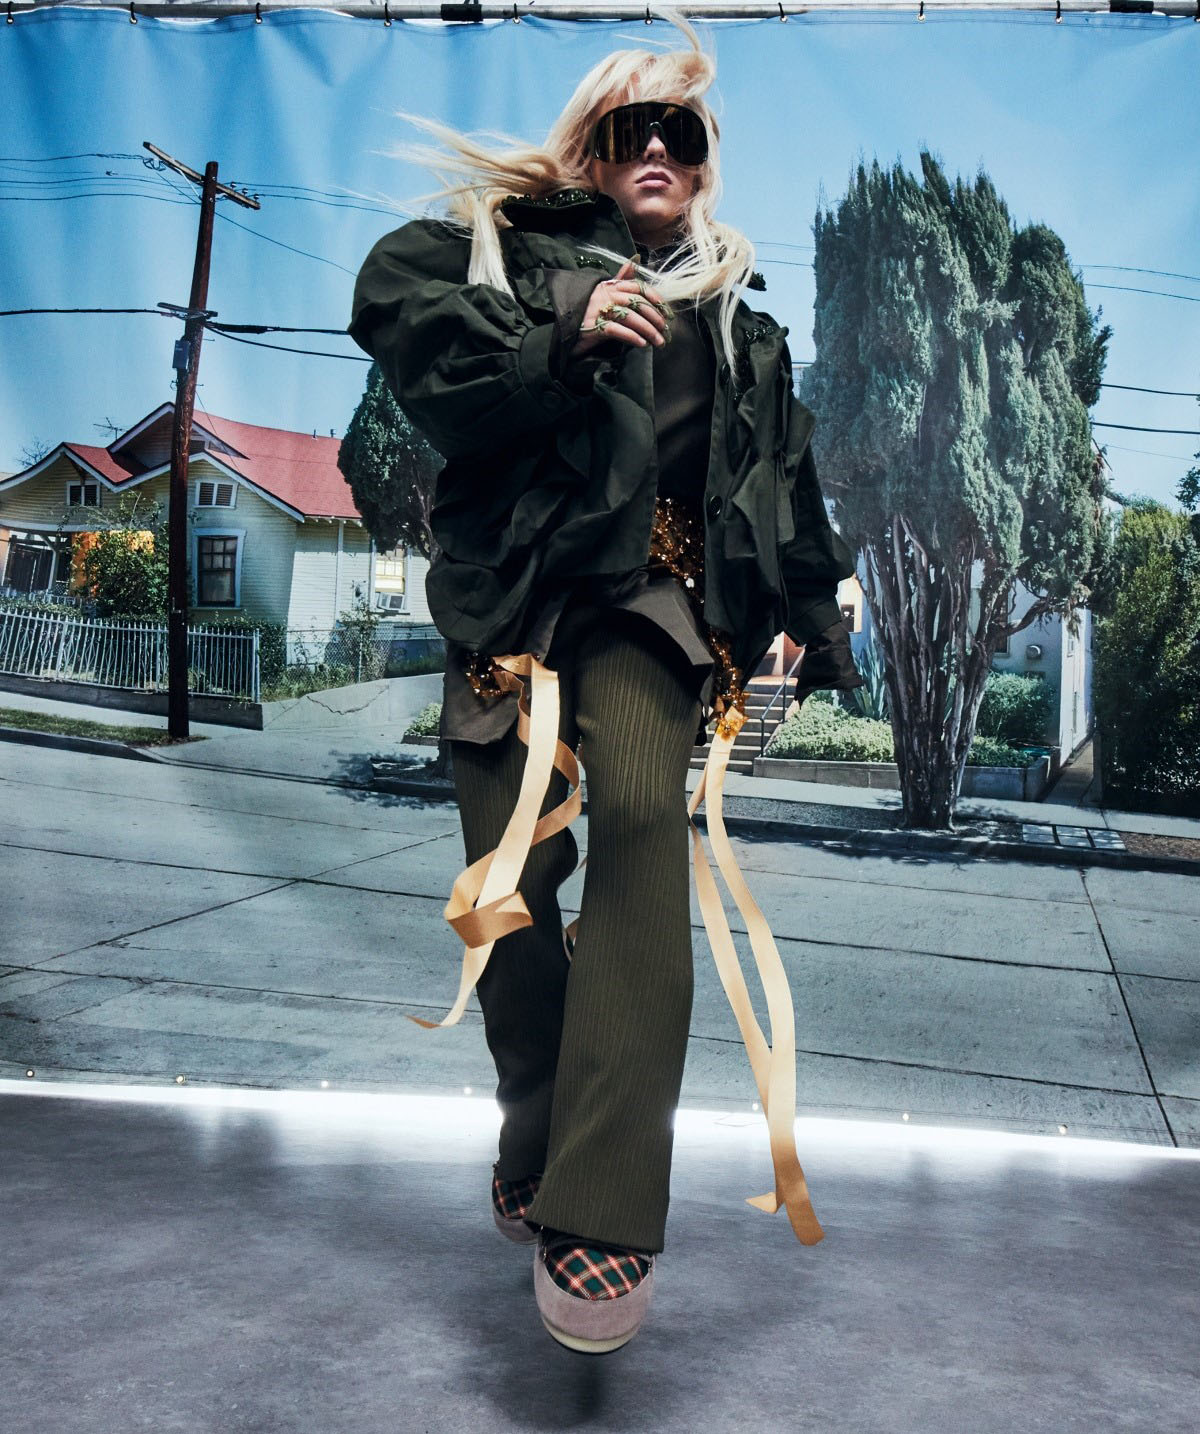 Billie Eilish covers Vogue Australia August 2021 by Emma Summerton